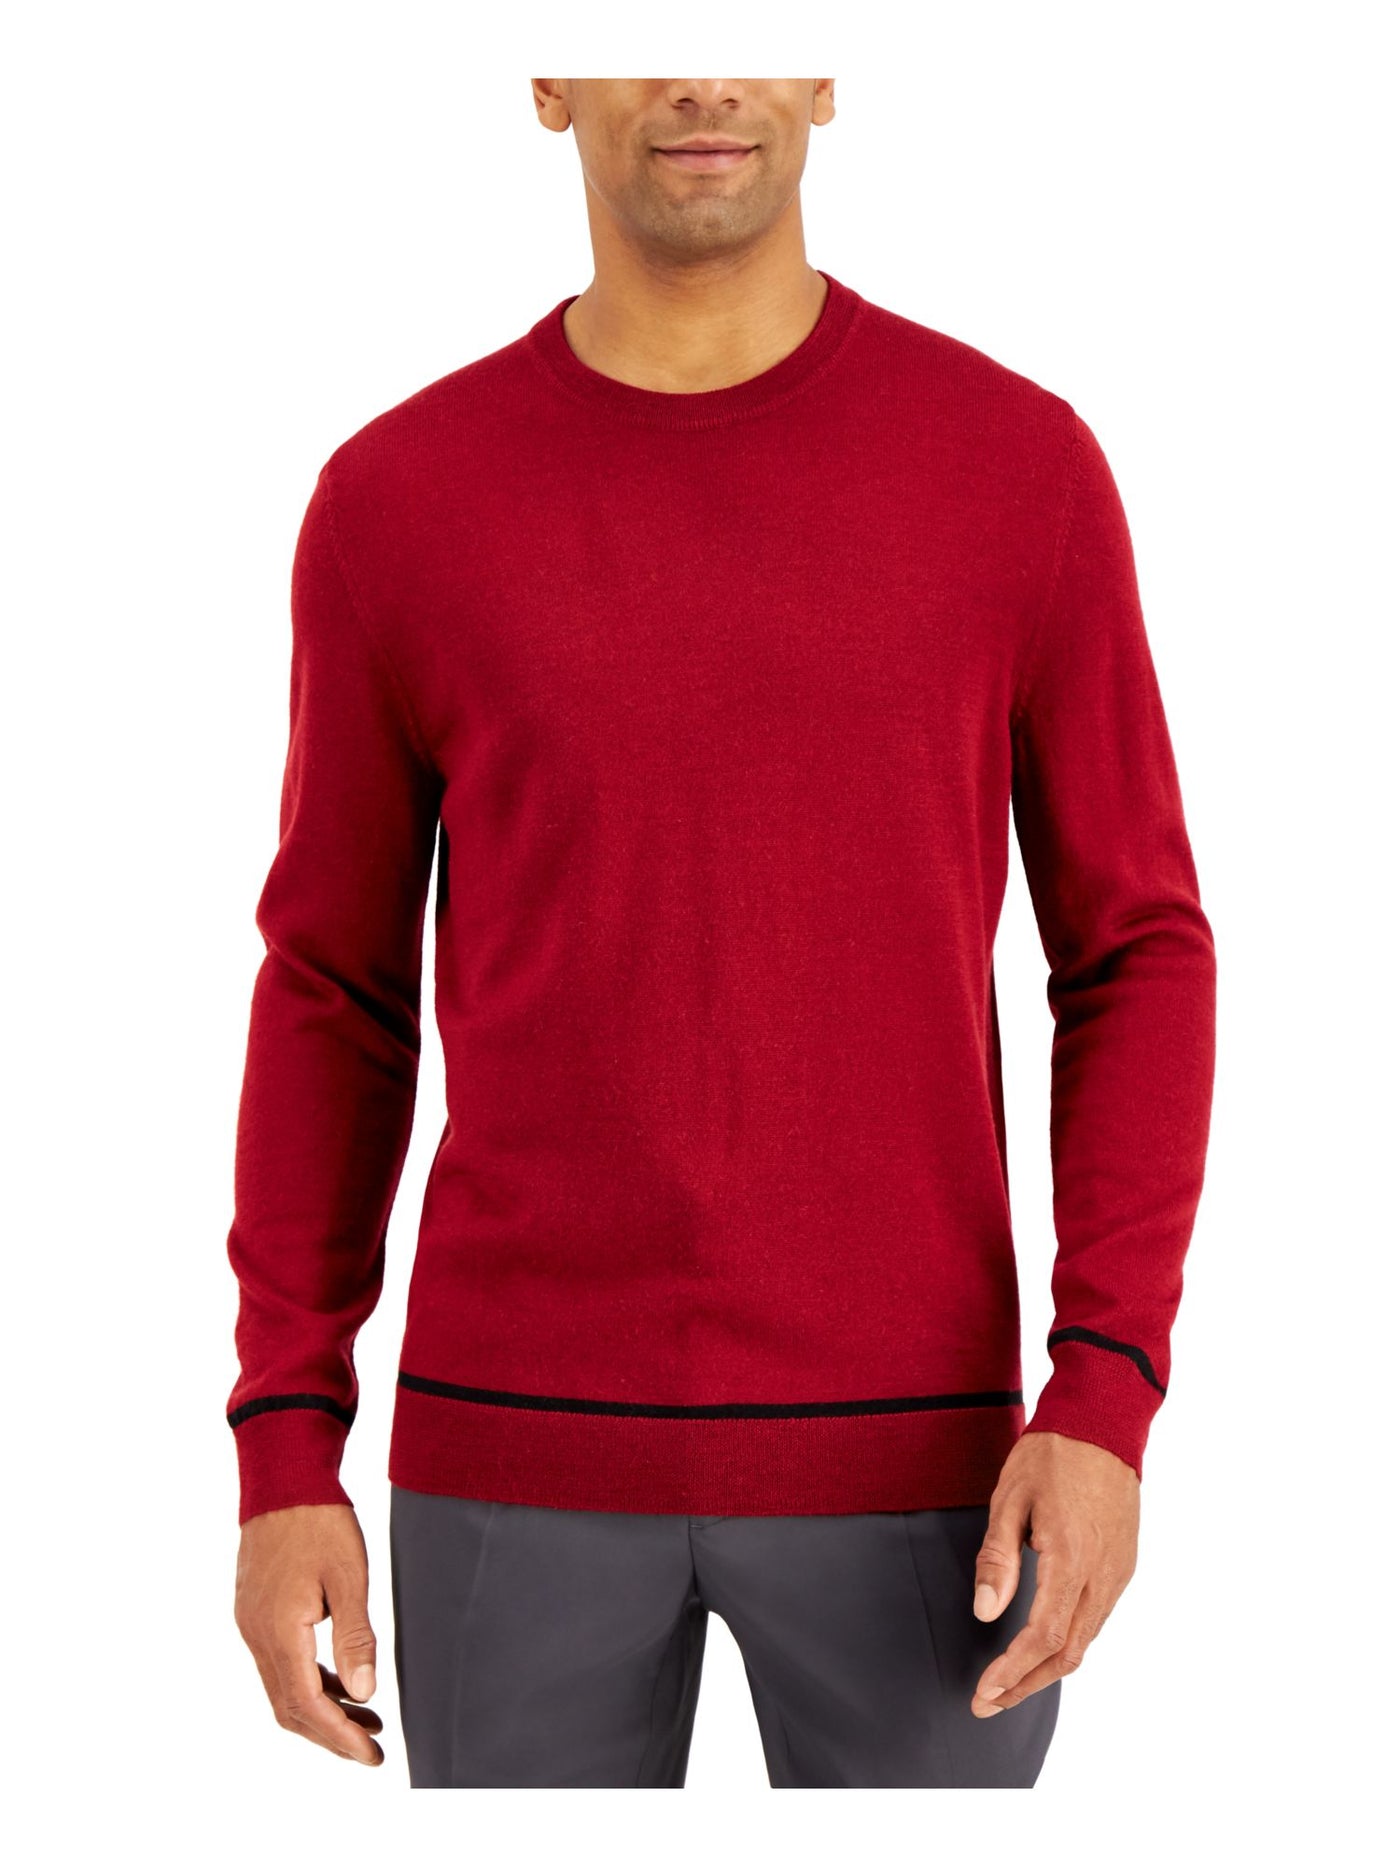 ALFANI Mens Red Crew Neck Classic Fit Pullover Sweater S